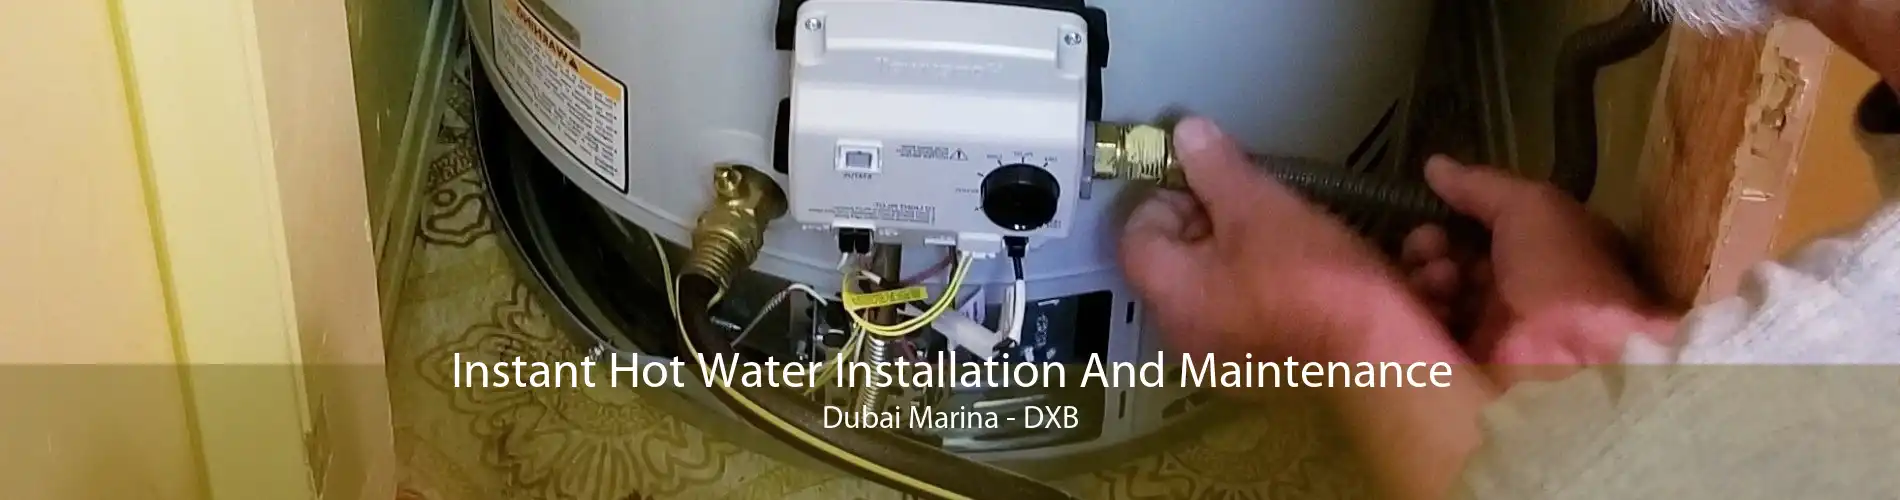 Instant Hot Water Installation And Maintenance Dubai Marina - DXB